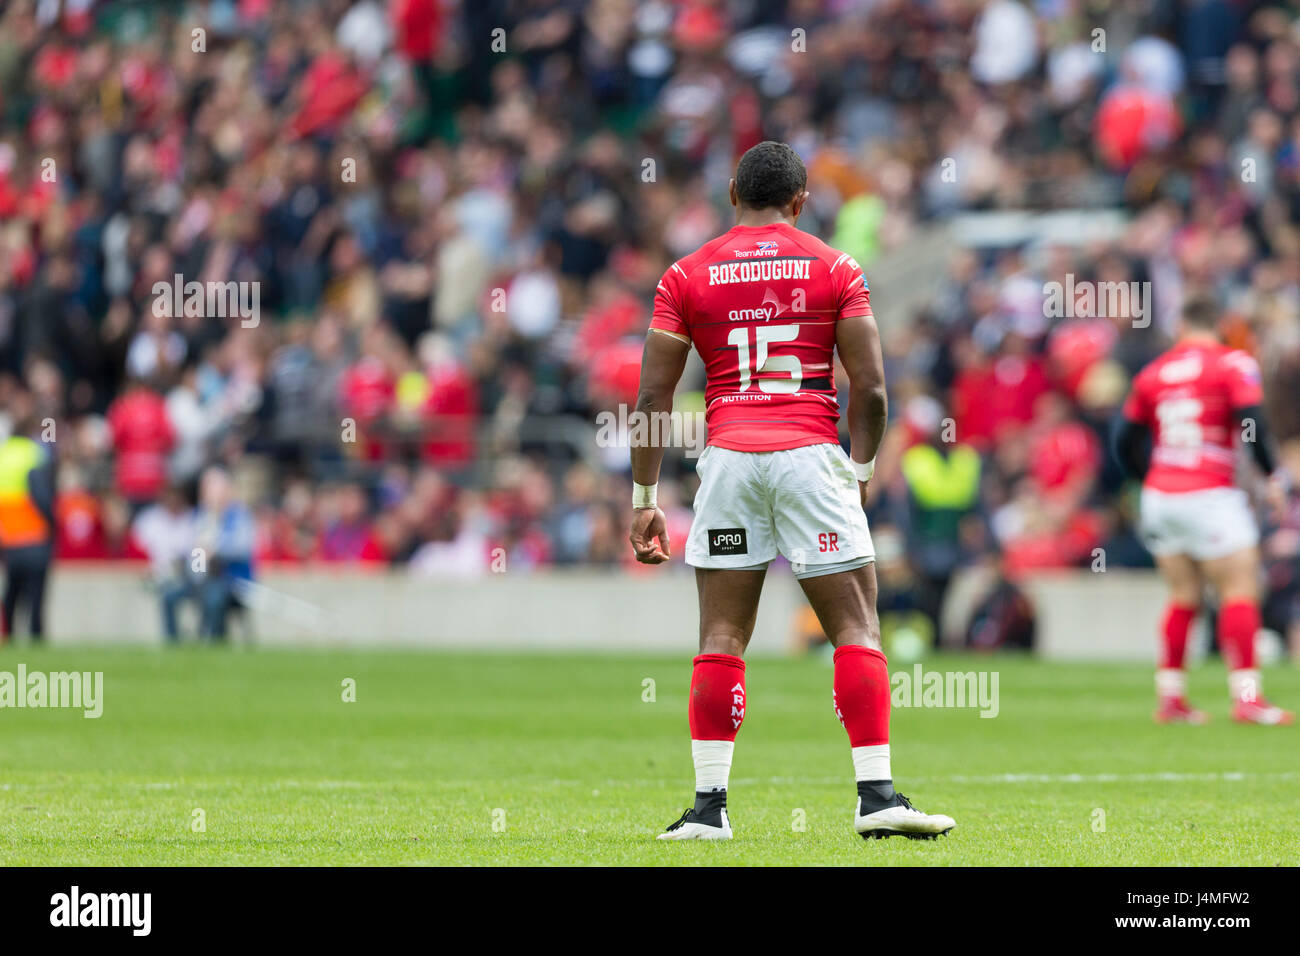 Army rugby player Semesa Rokoduguni playing at Twickenham in 2017 Stock Photo